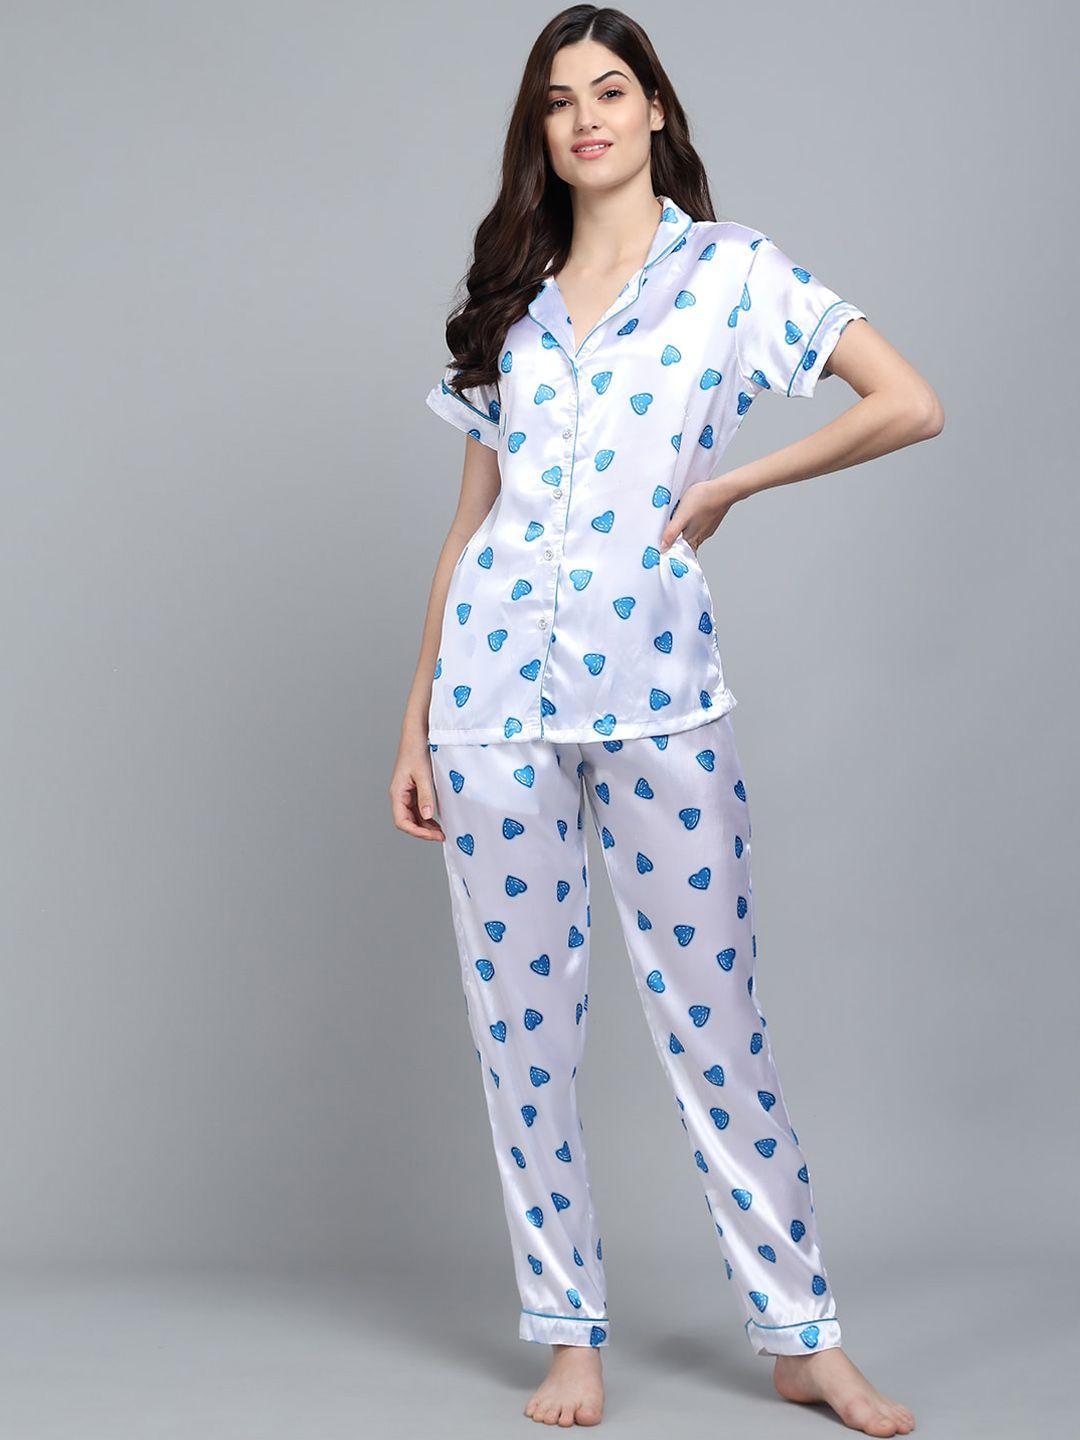 sephani women white & blue printed night suit